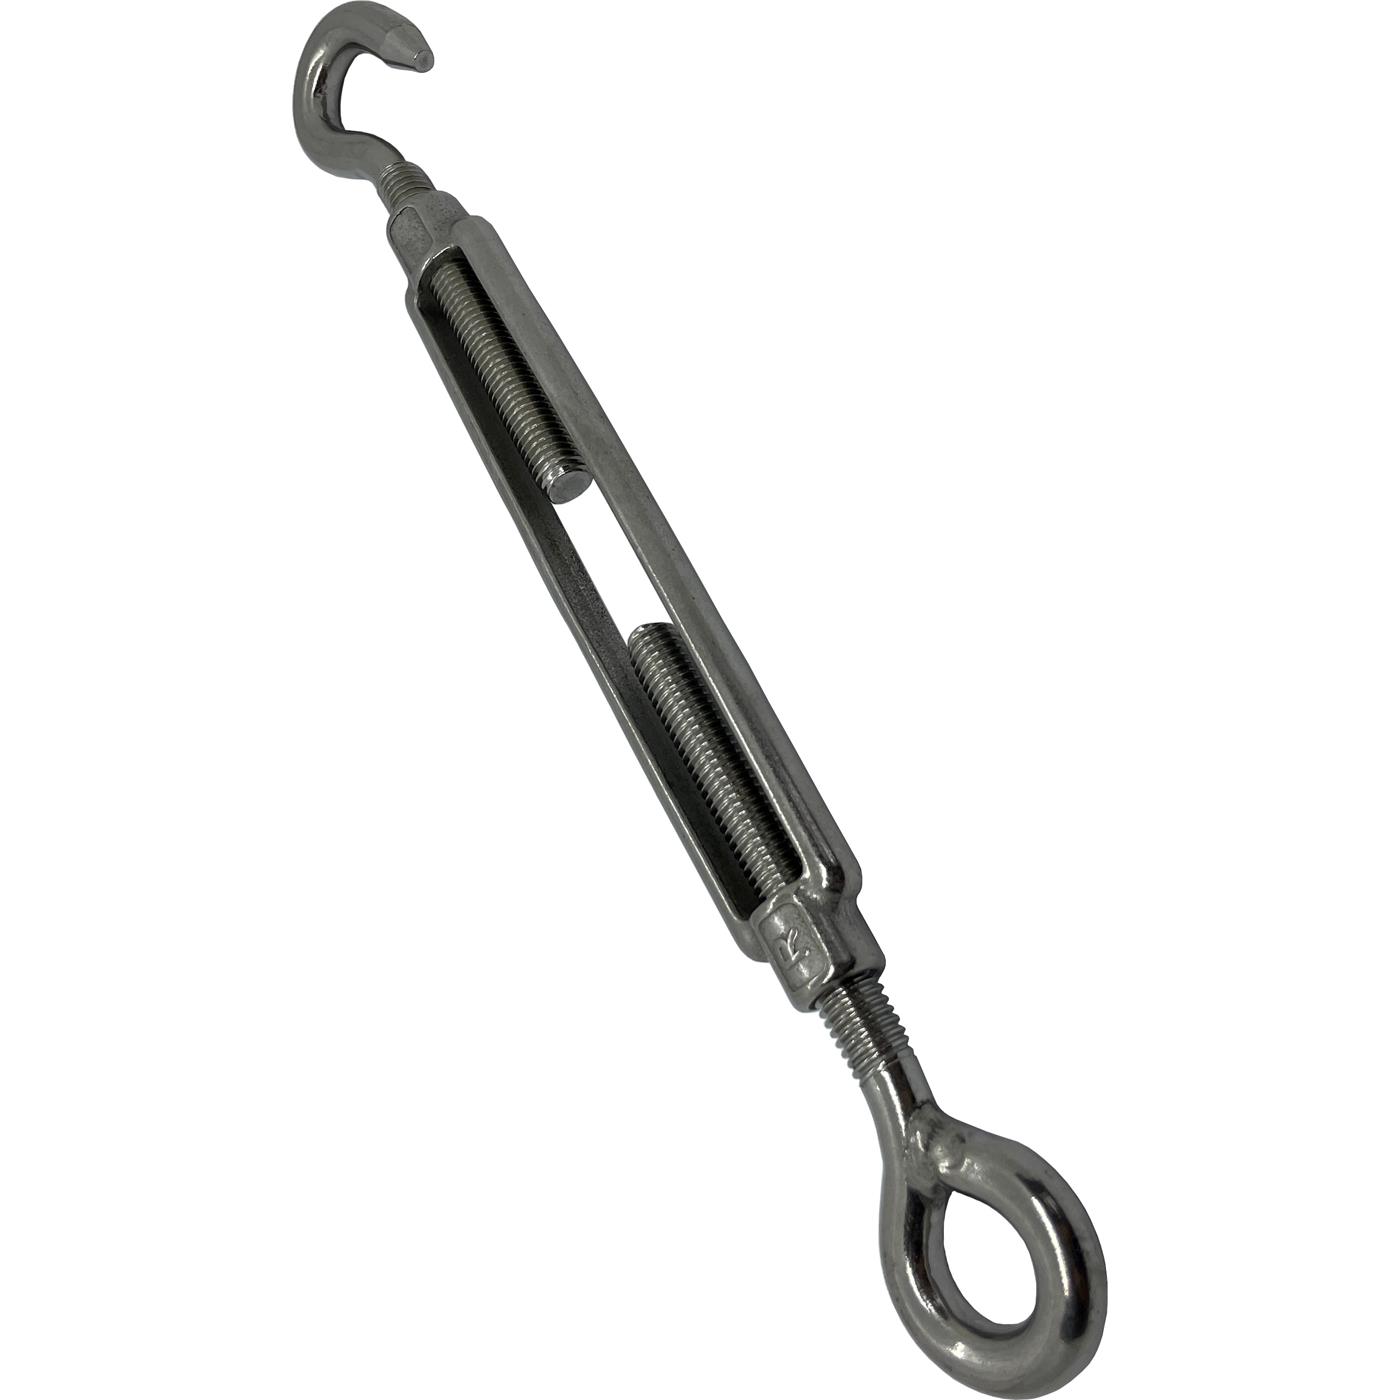 Rope tensioner Eyelet-Hook Stainless steel V4A 316 M6 Turnbuckle Shroud clamp